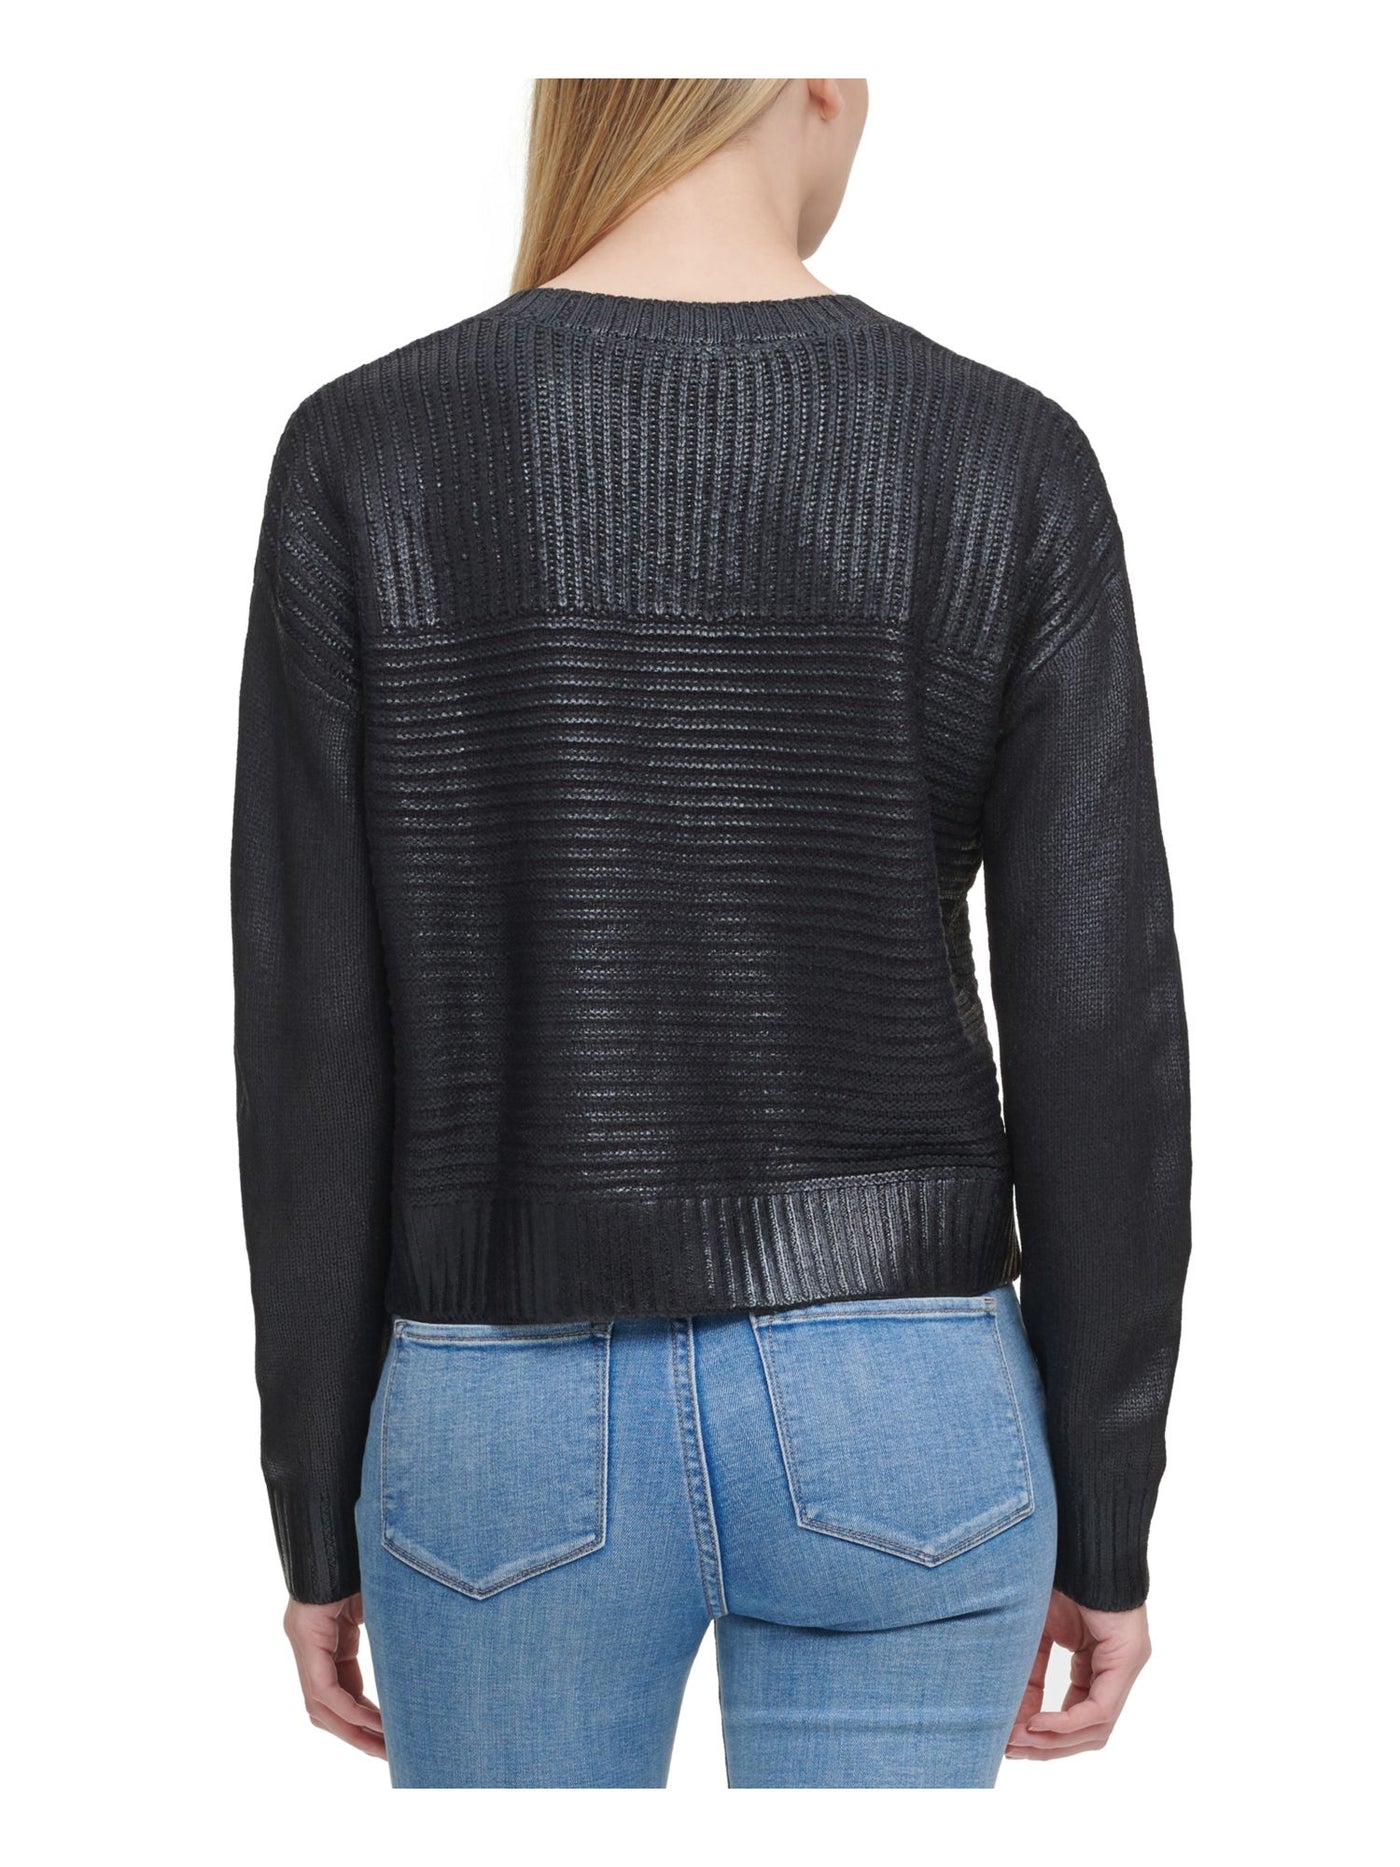 DKNY Womens Black Long Sleeve Crew Neck Sweater L